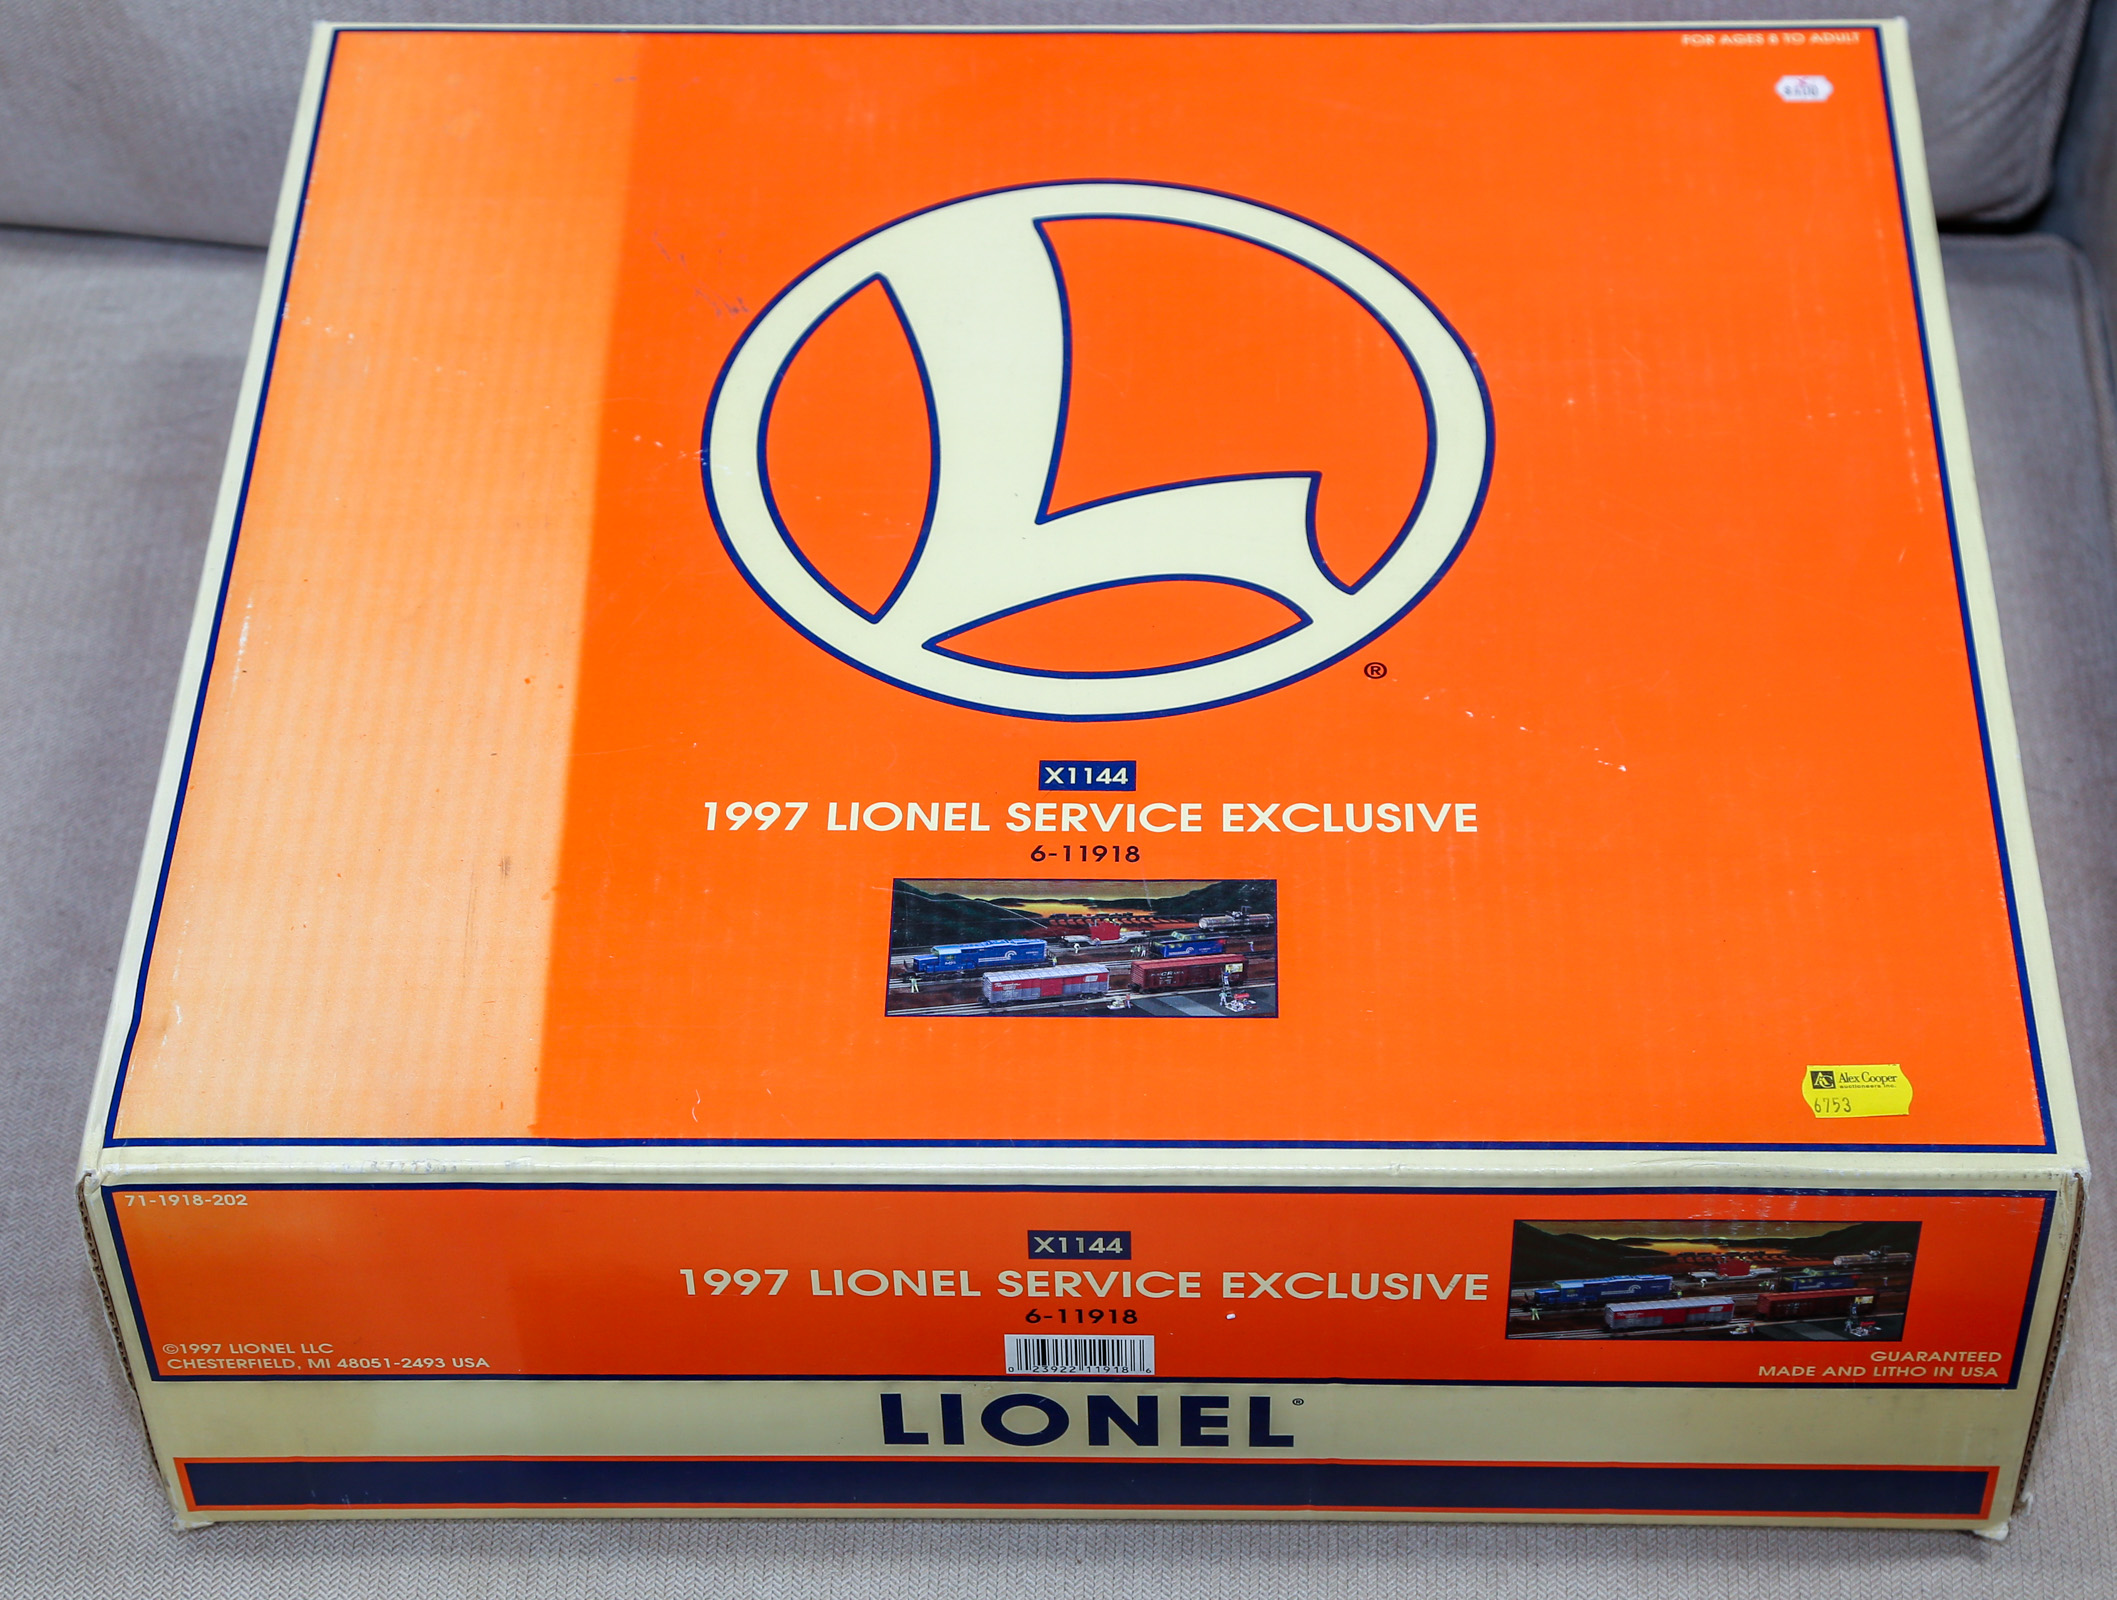 LIONEL 1977 SERVICE EXCLUSIVE BOXED